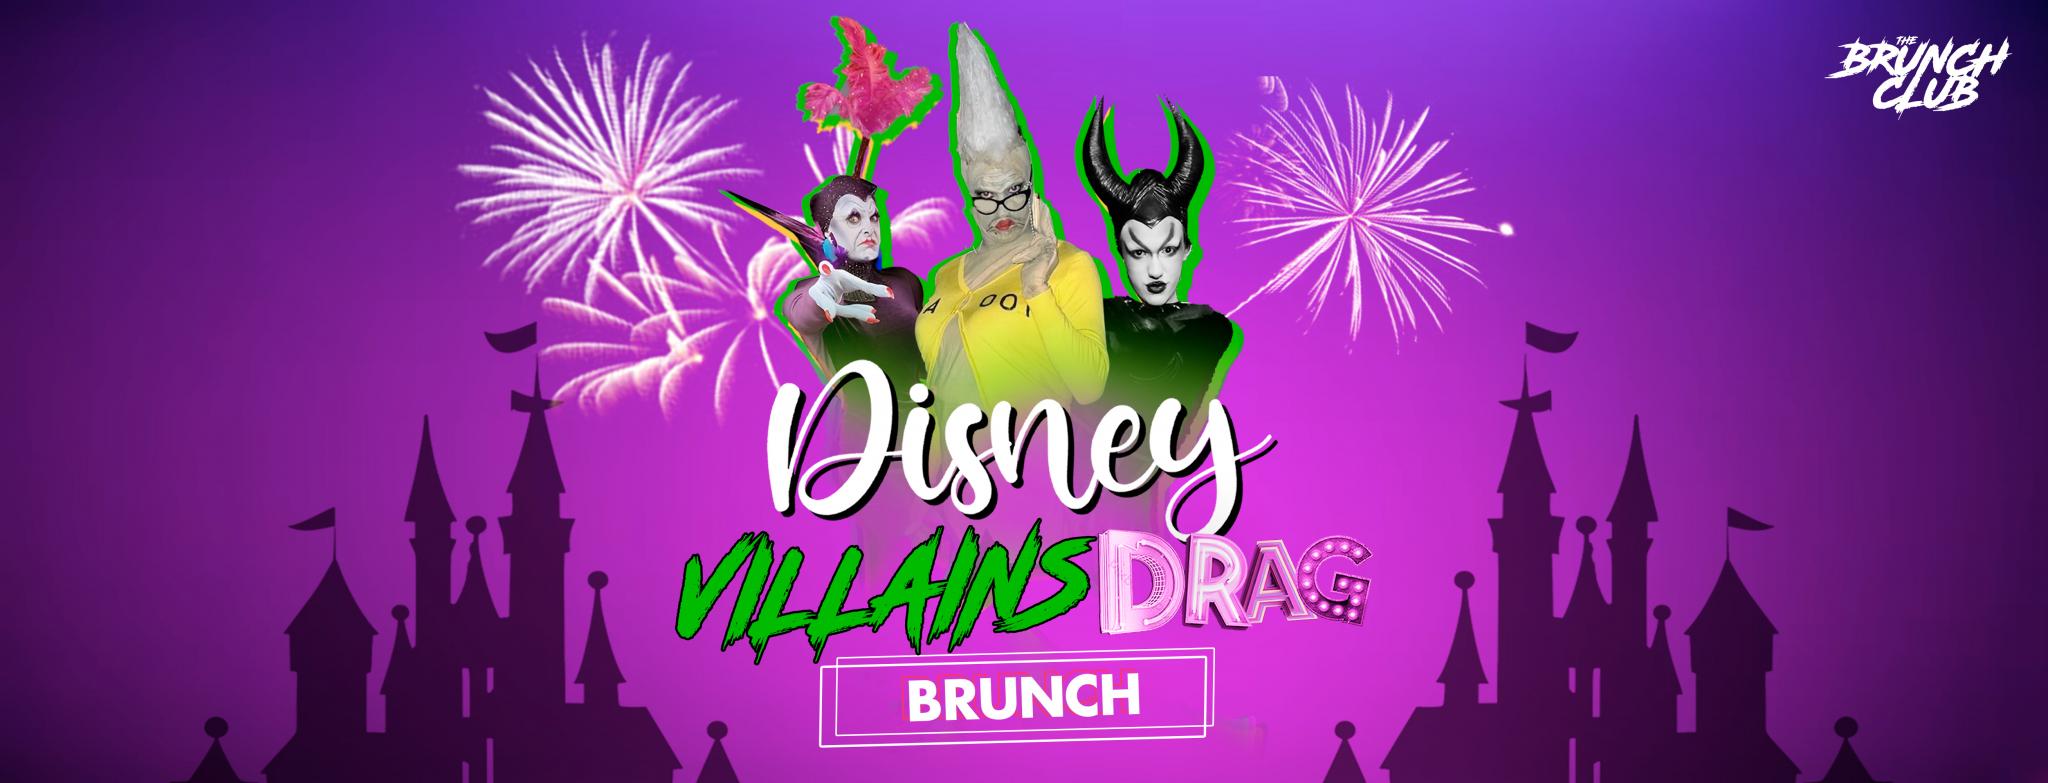 Disney Villains Drag Bottomless Brunch - Milton Keynes